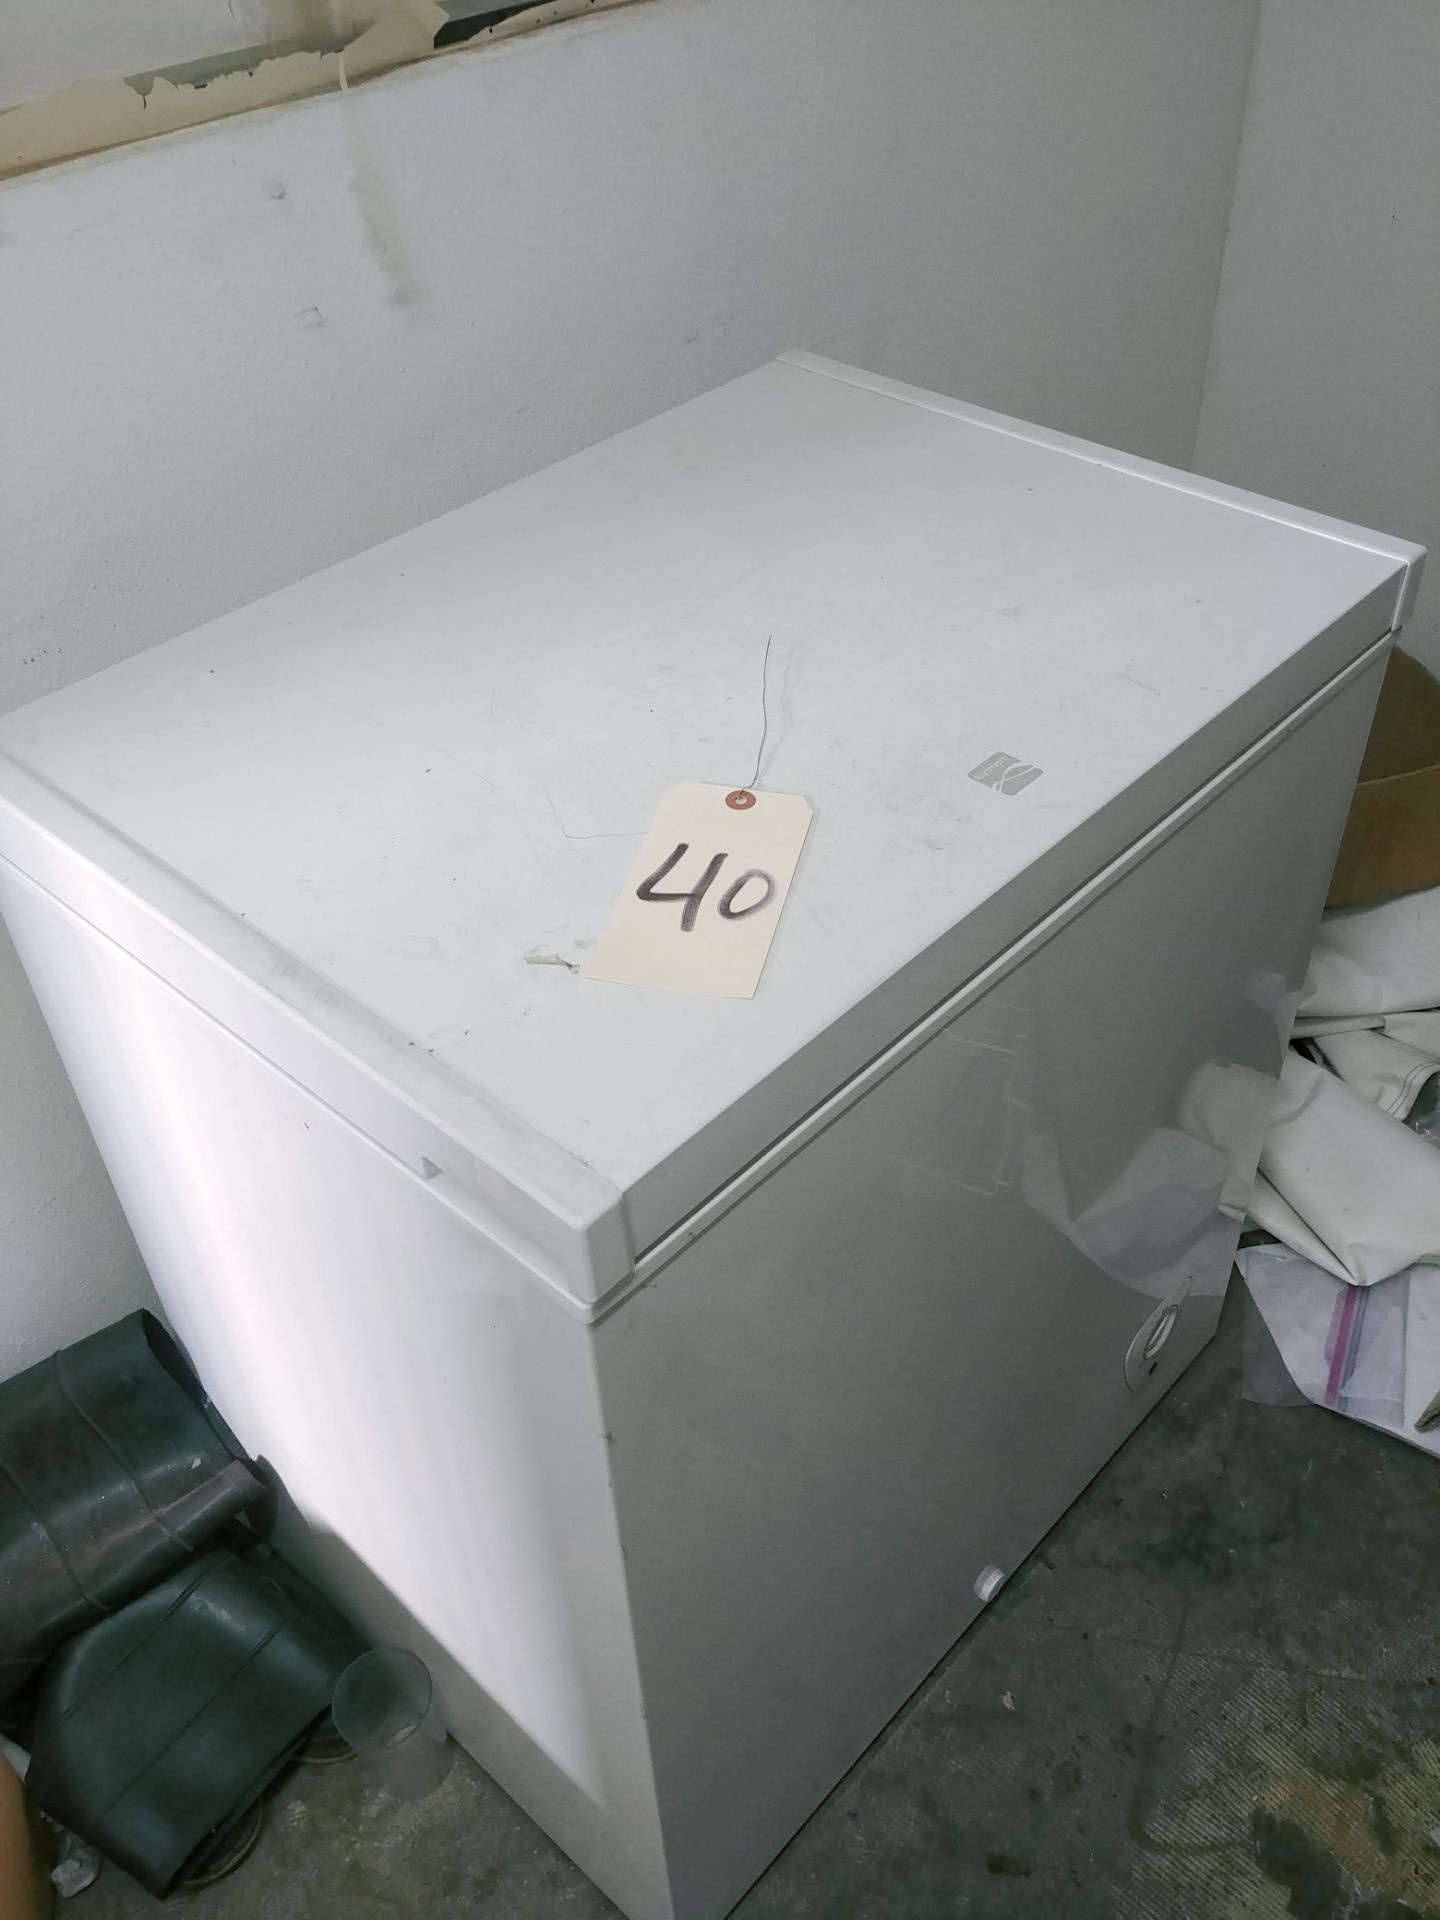 Chest Freezer - Sub to Bulk | Reqd Rig Fee: $50